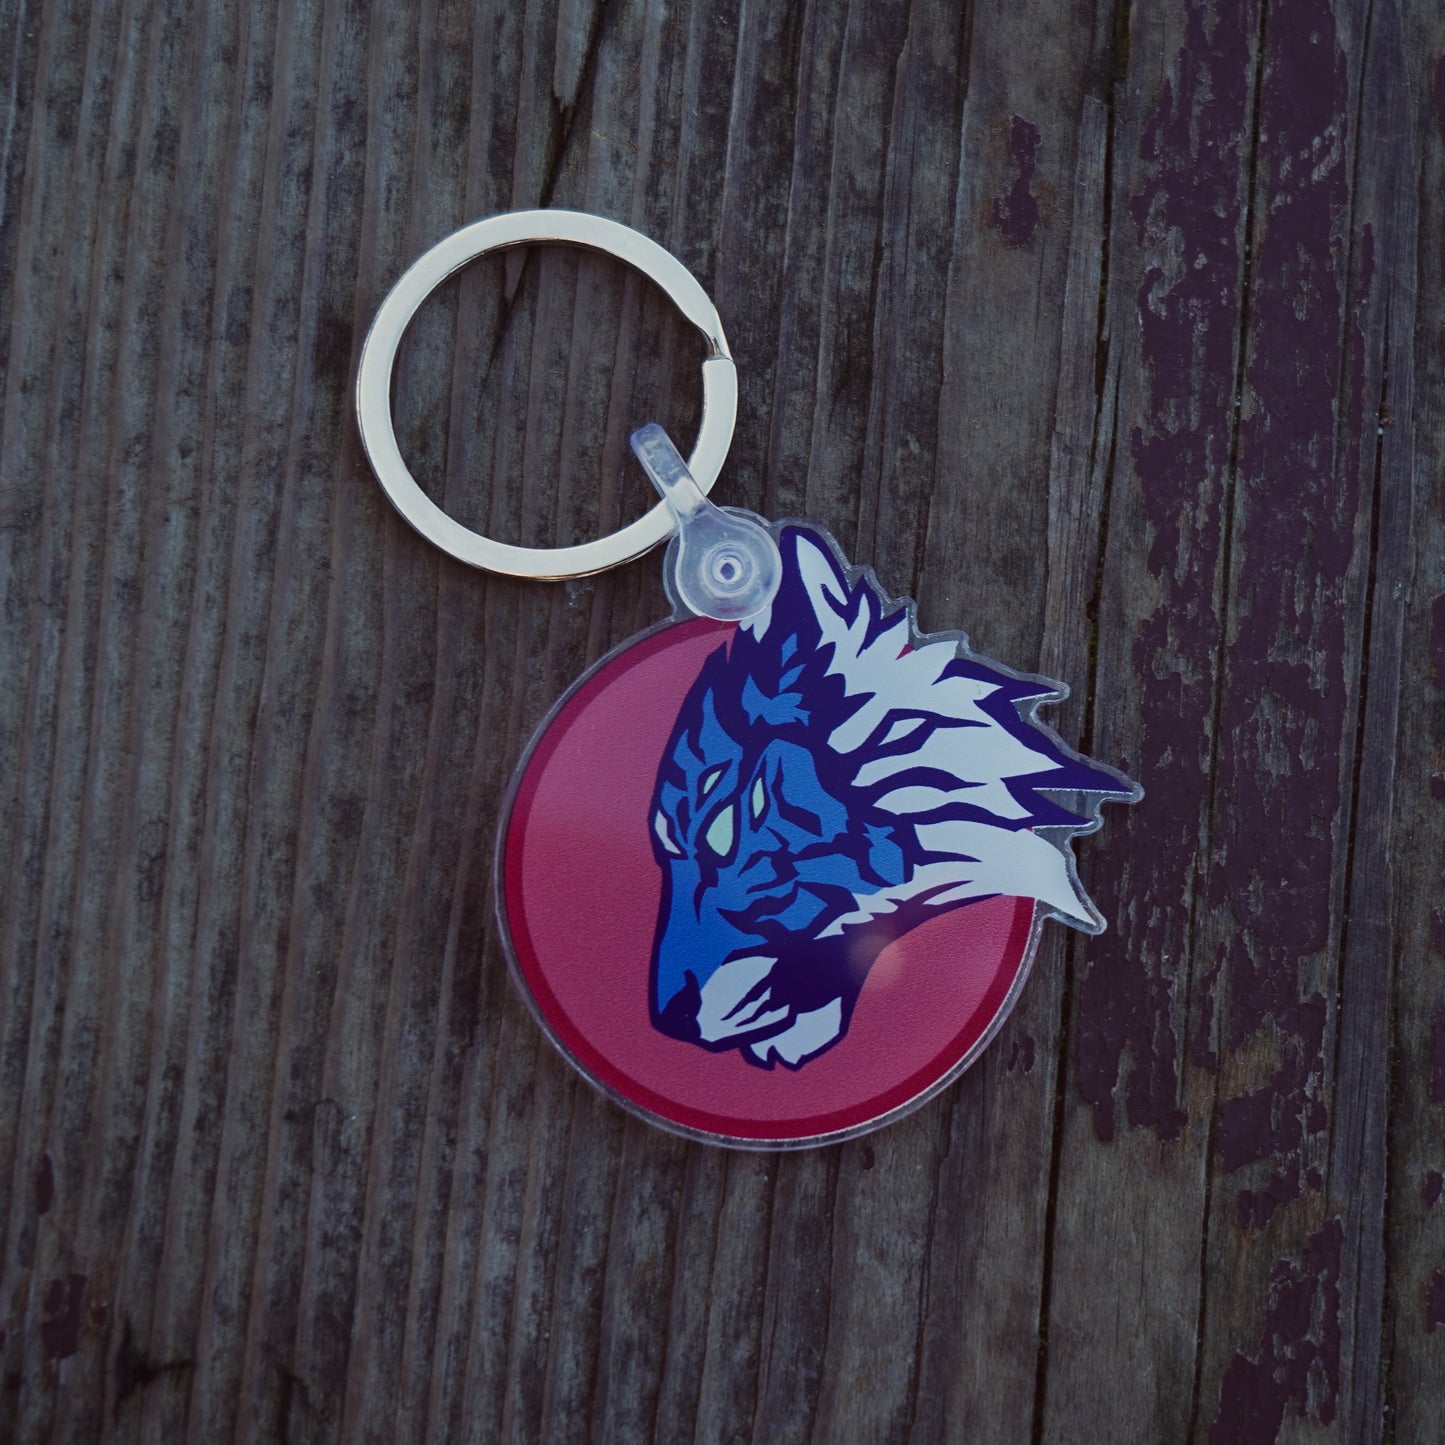 acrylic charm keychain blue tiger pink